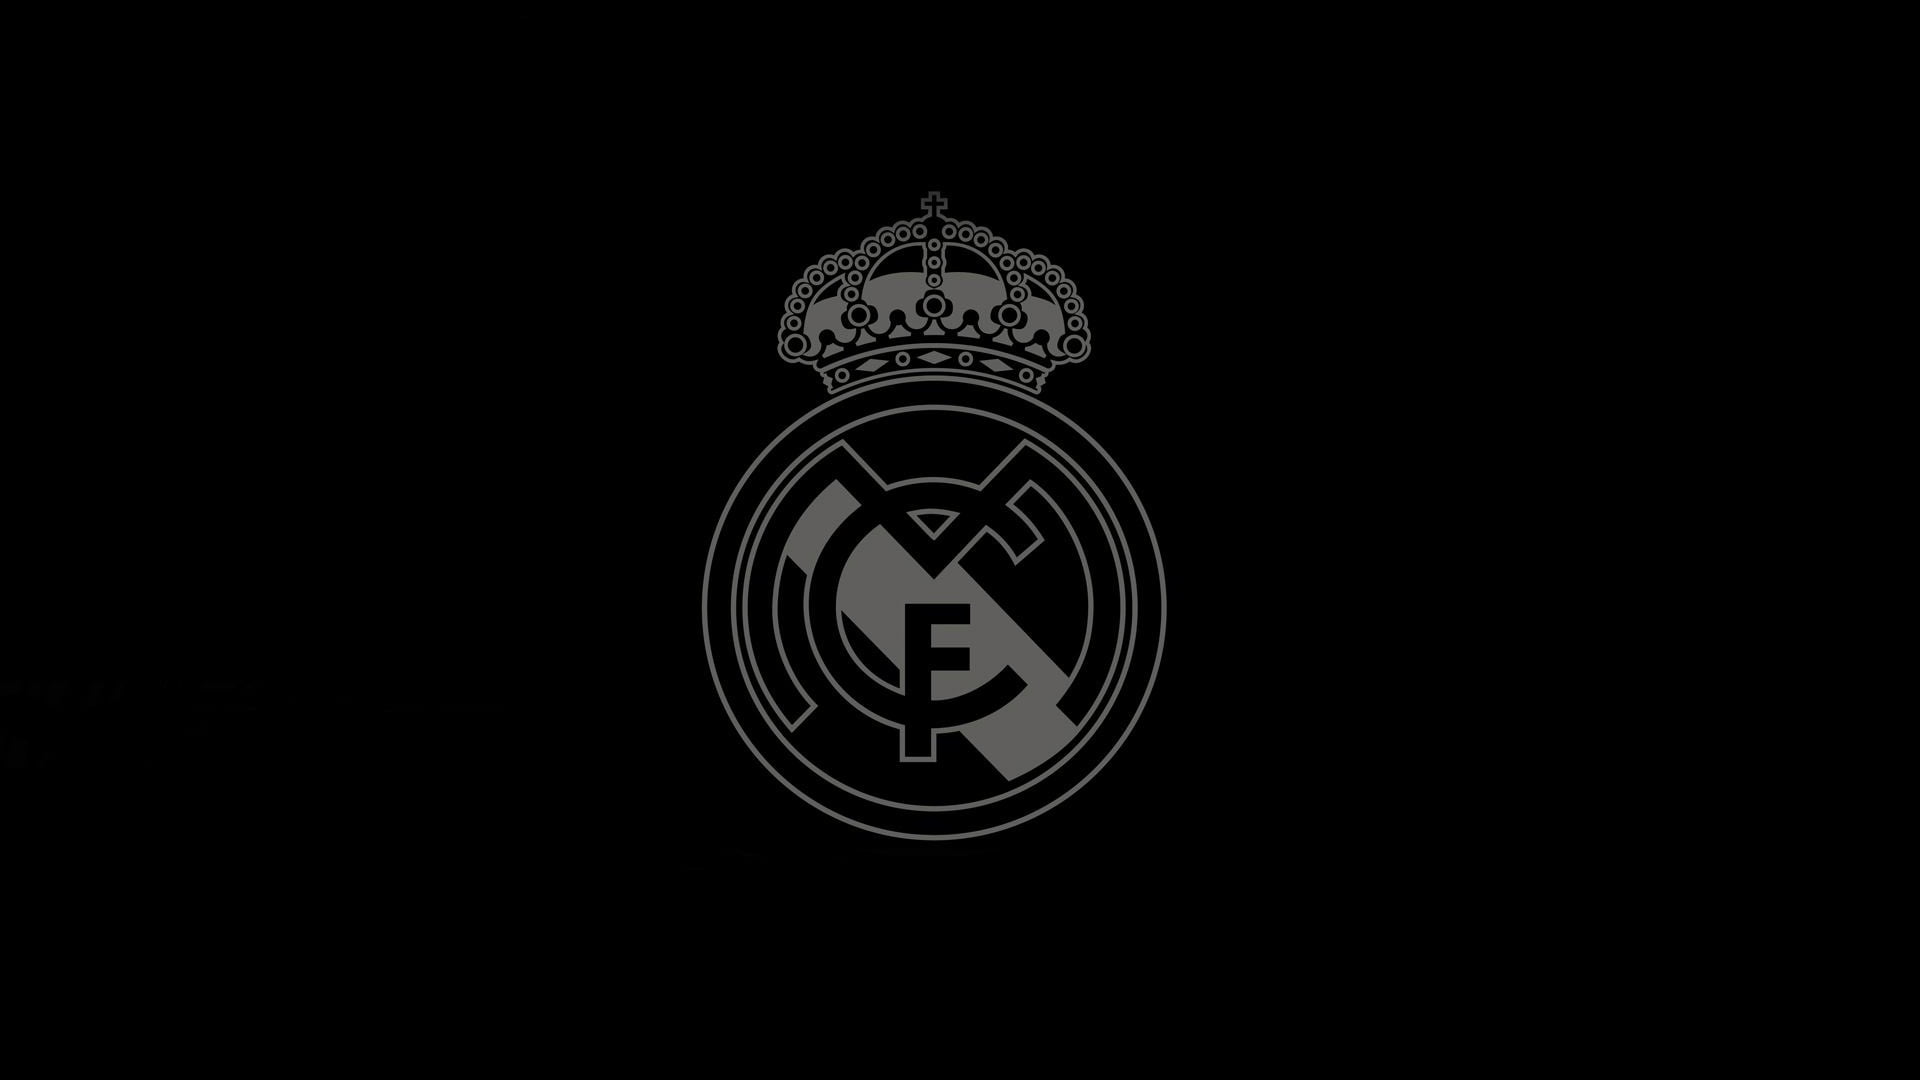 Real MadriD FC logo, Spain, CR7, Football club, sign, symbol